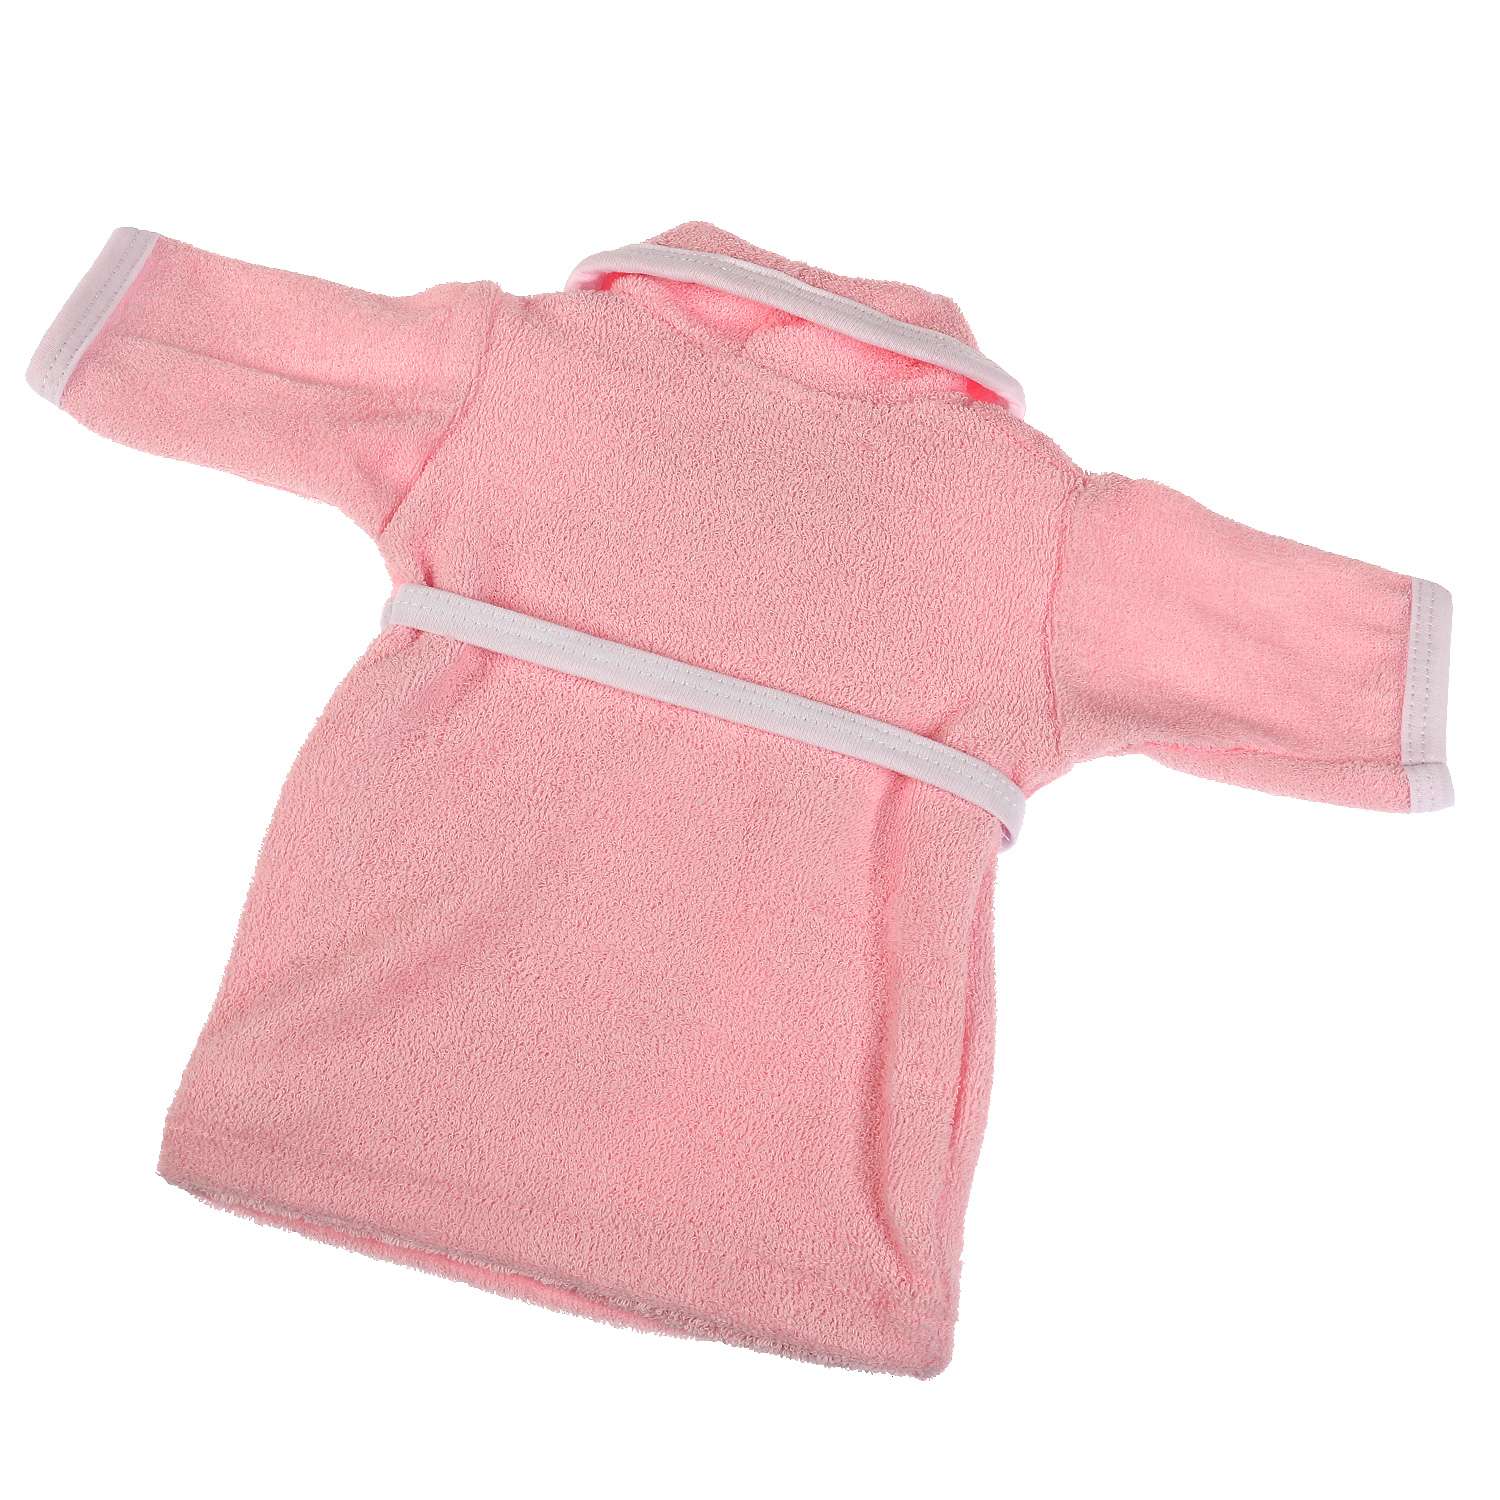 Одежда для кукол Карапуз 40-42 см розовый халат зайка 334998 - фото 2